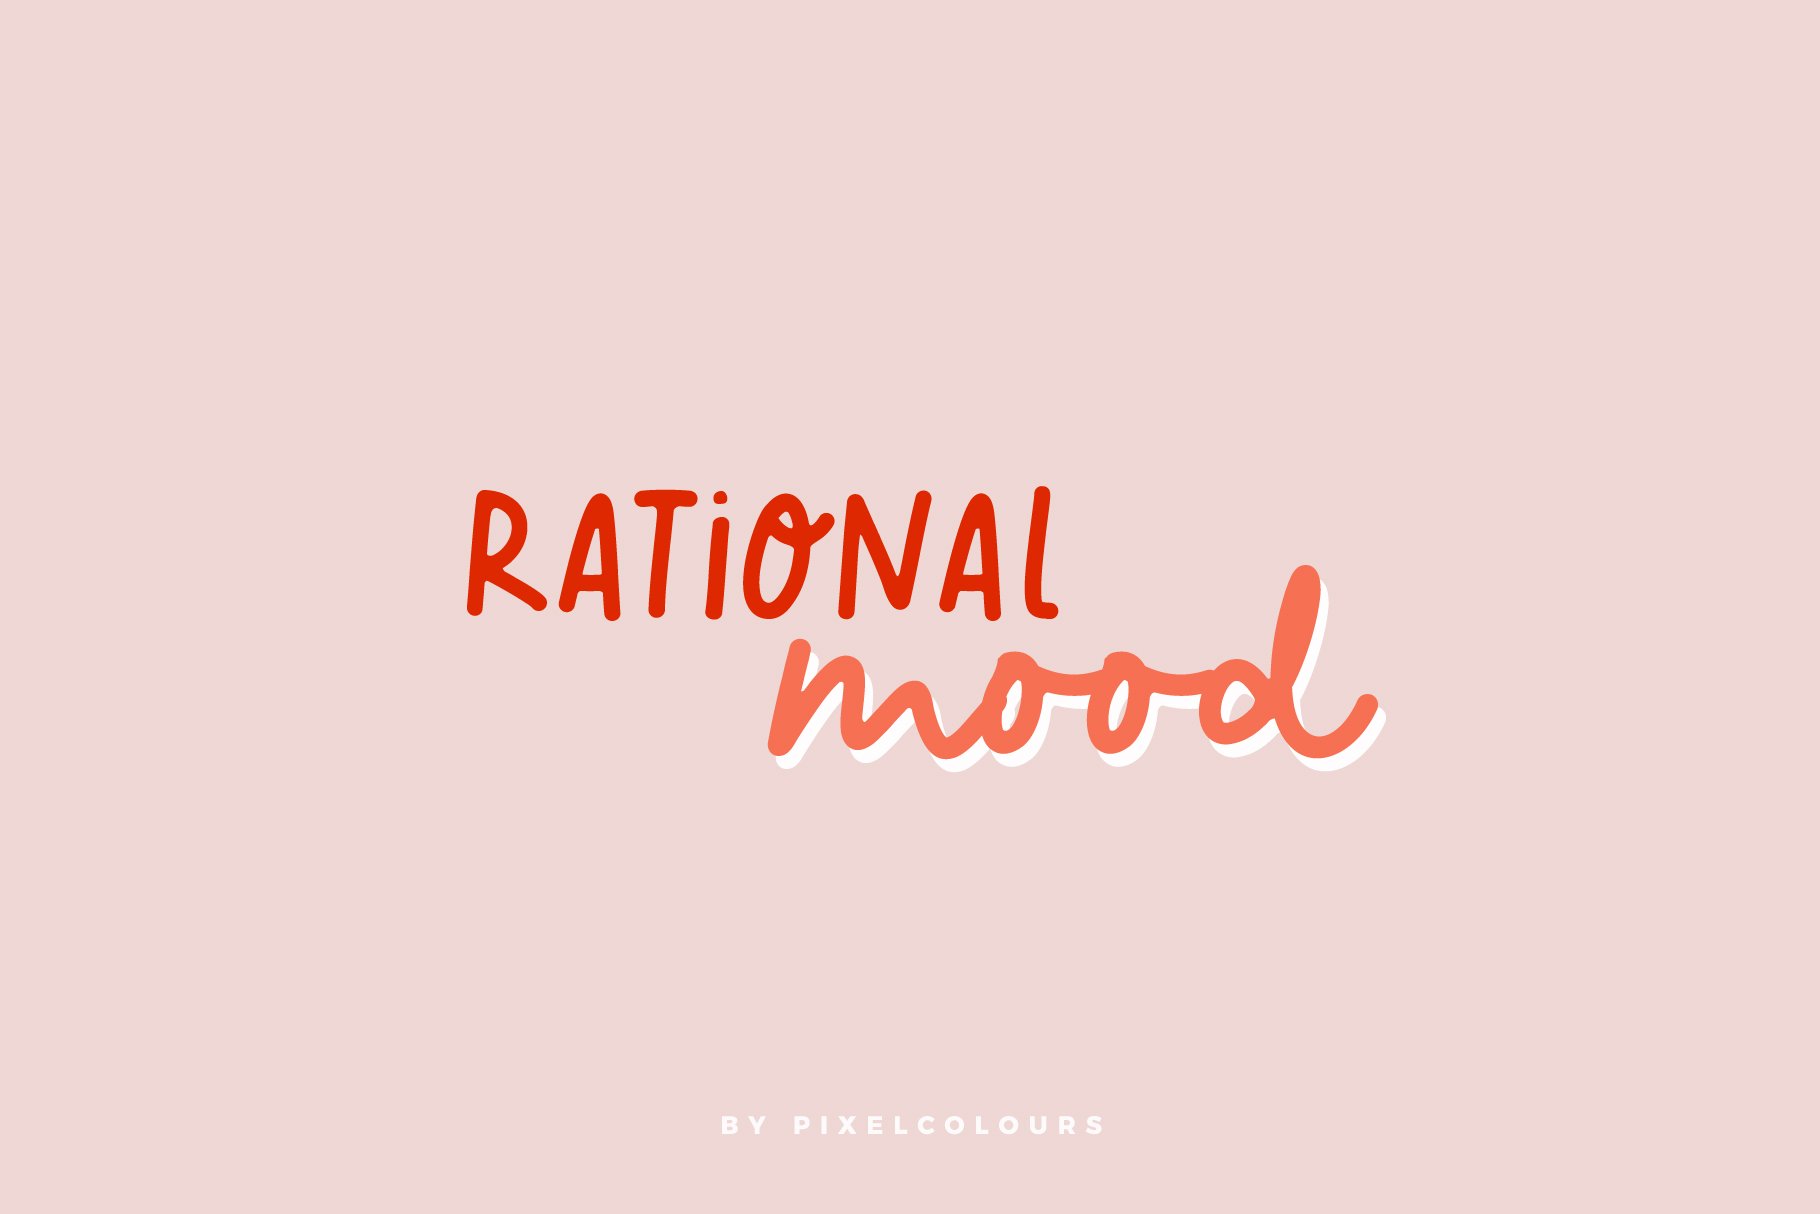 Script Font Rational Mood cover image.